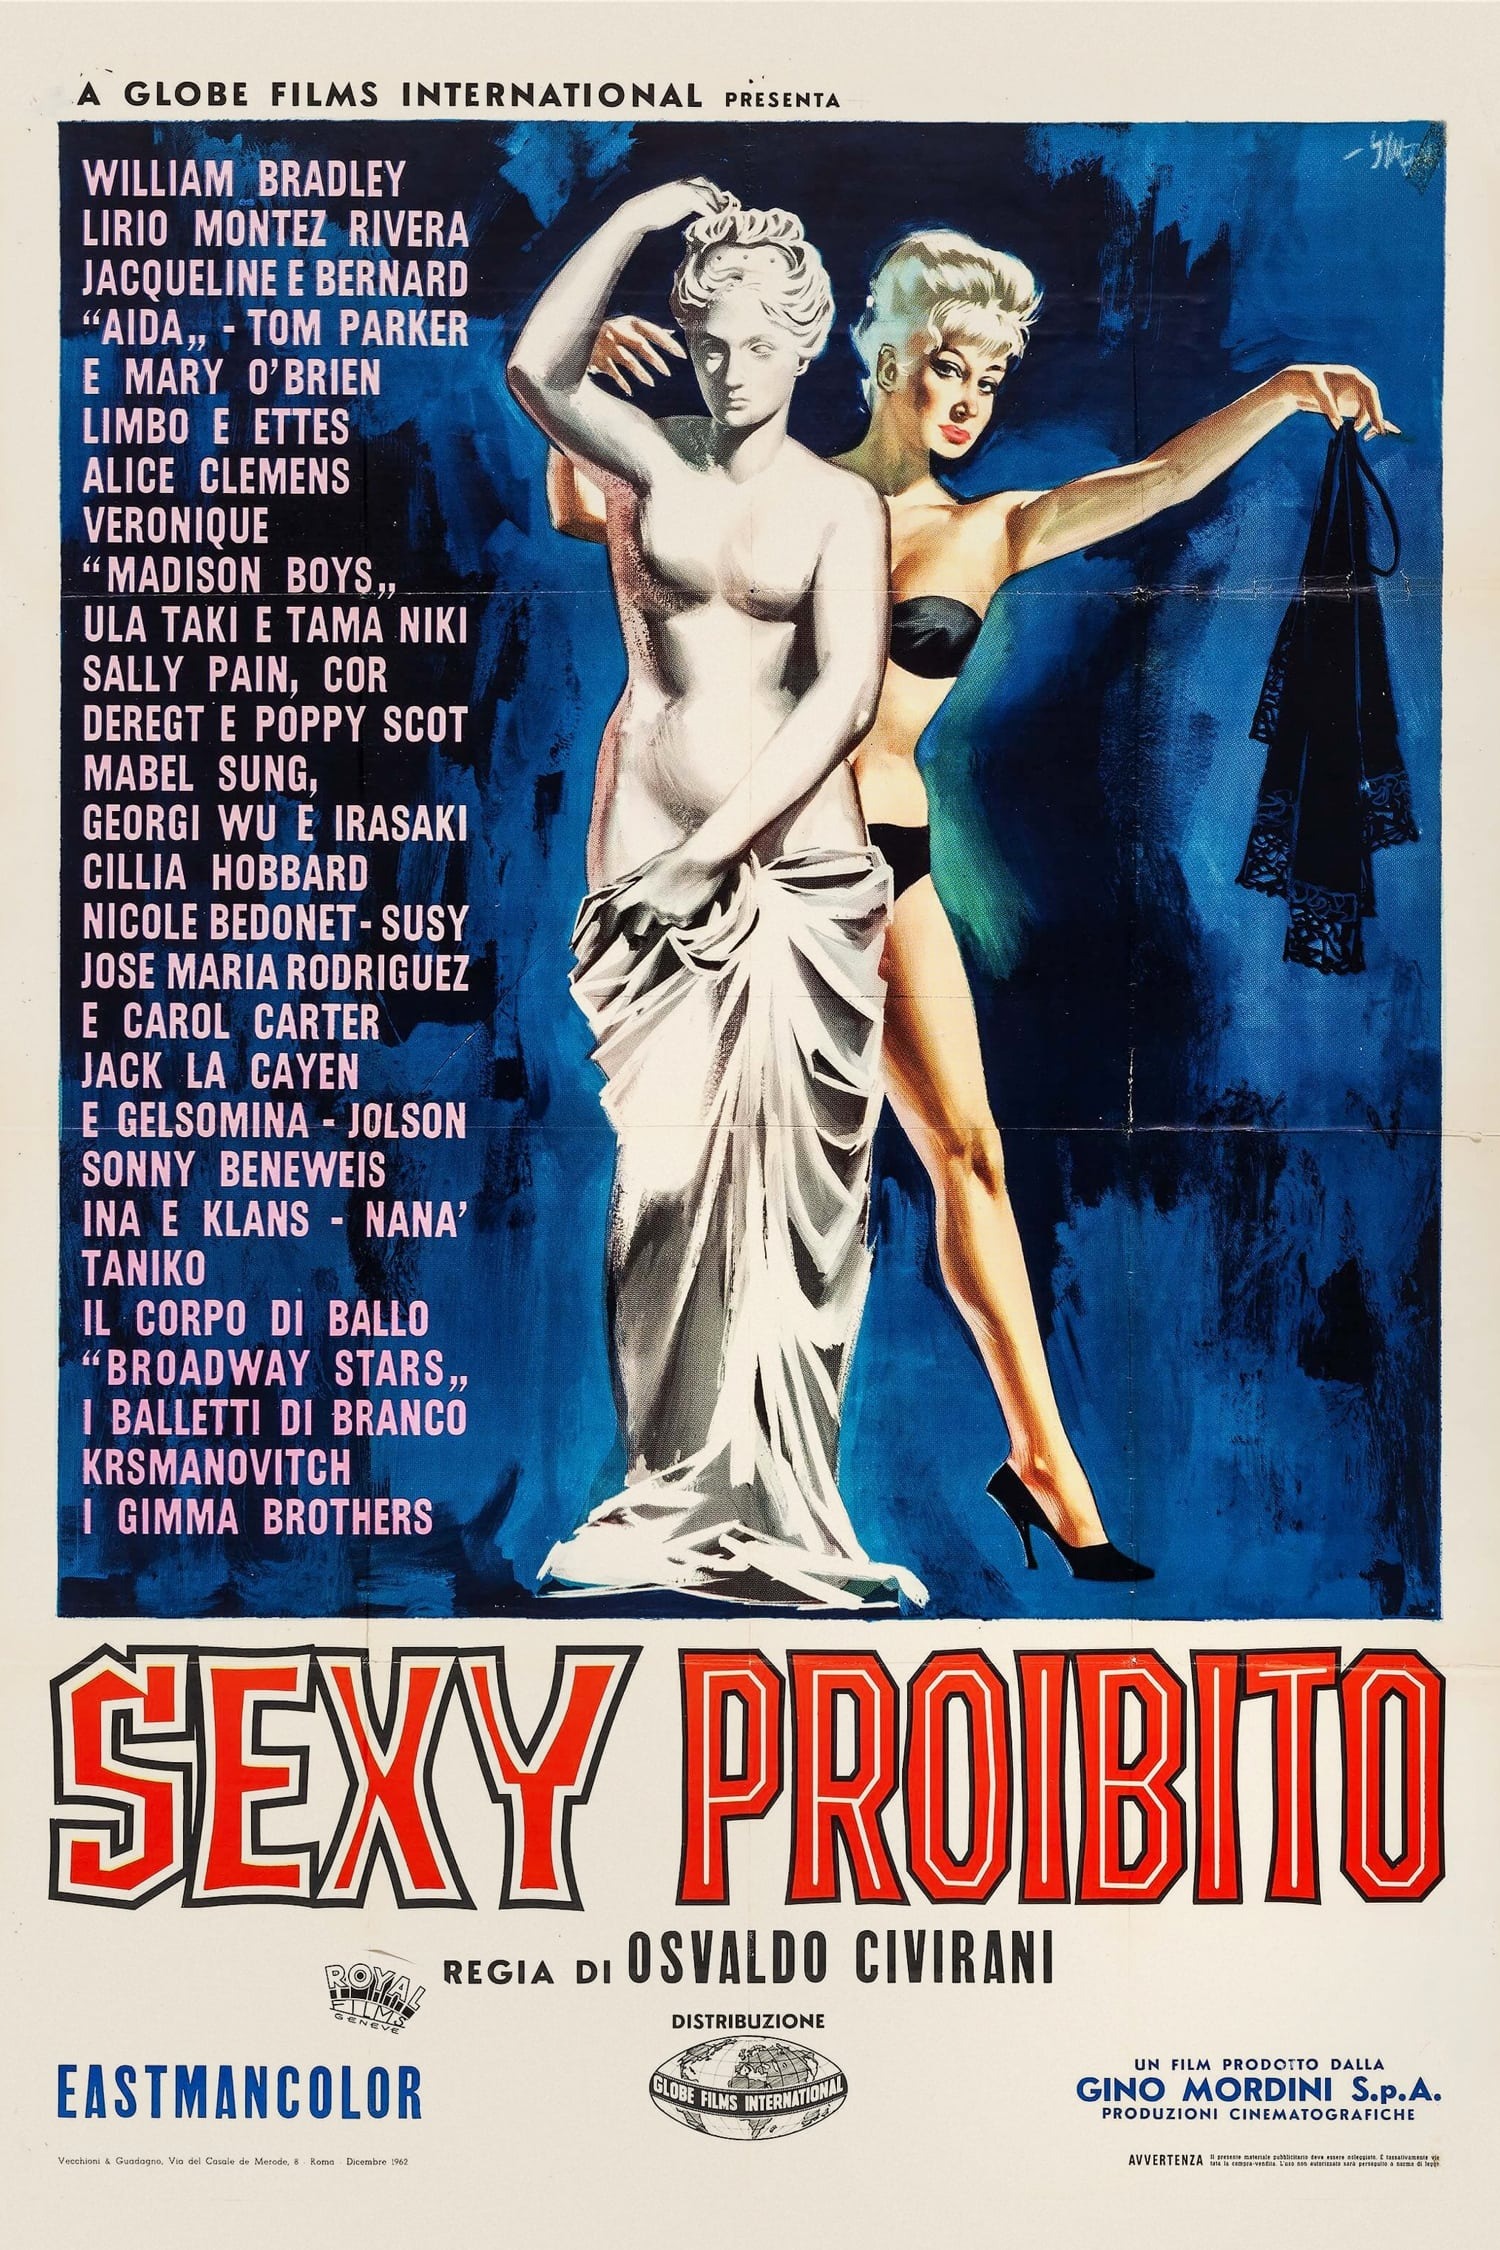 Mega Sized Movie Poster Image for Sexy proibitissimo 